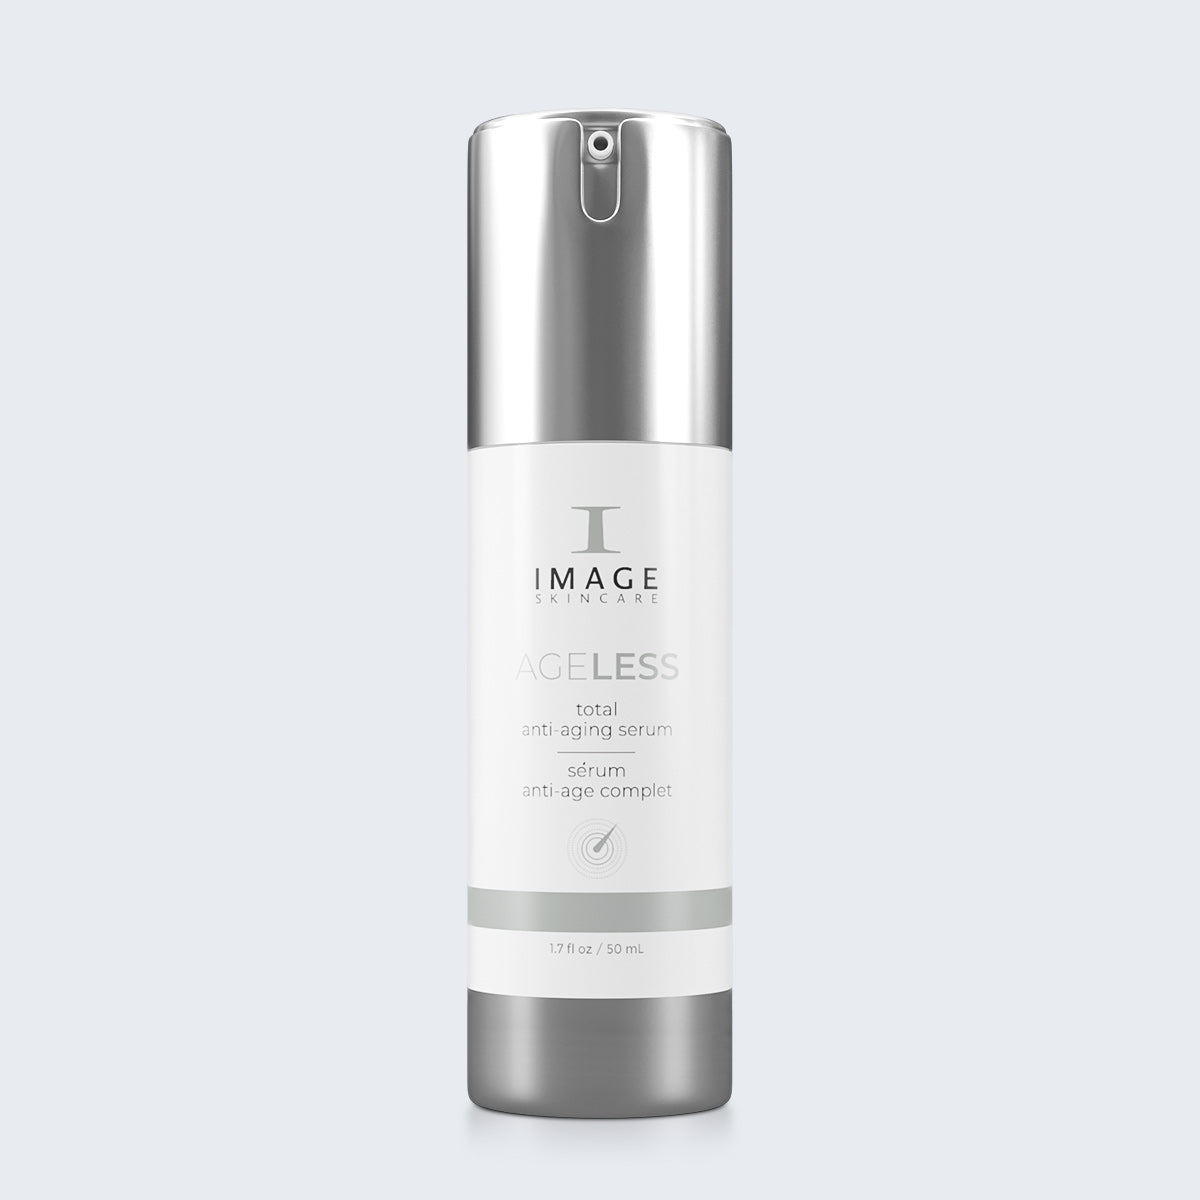 IMAGE Skincare AGELESS total anti-aging serum